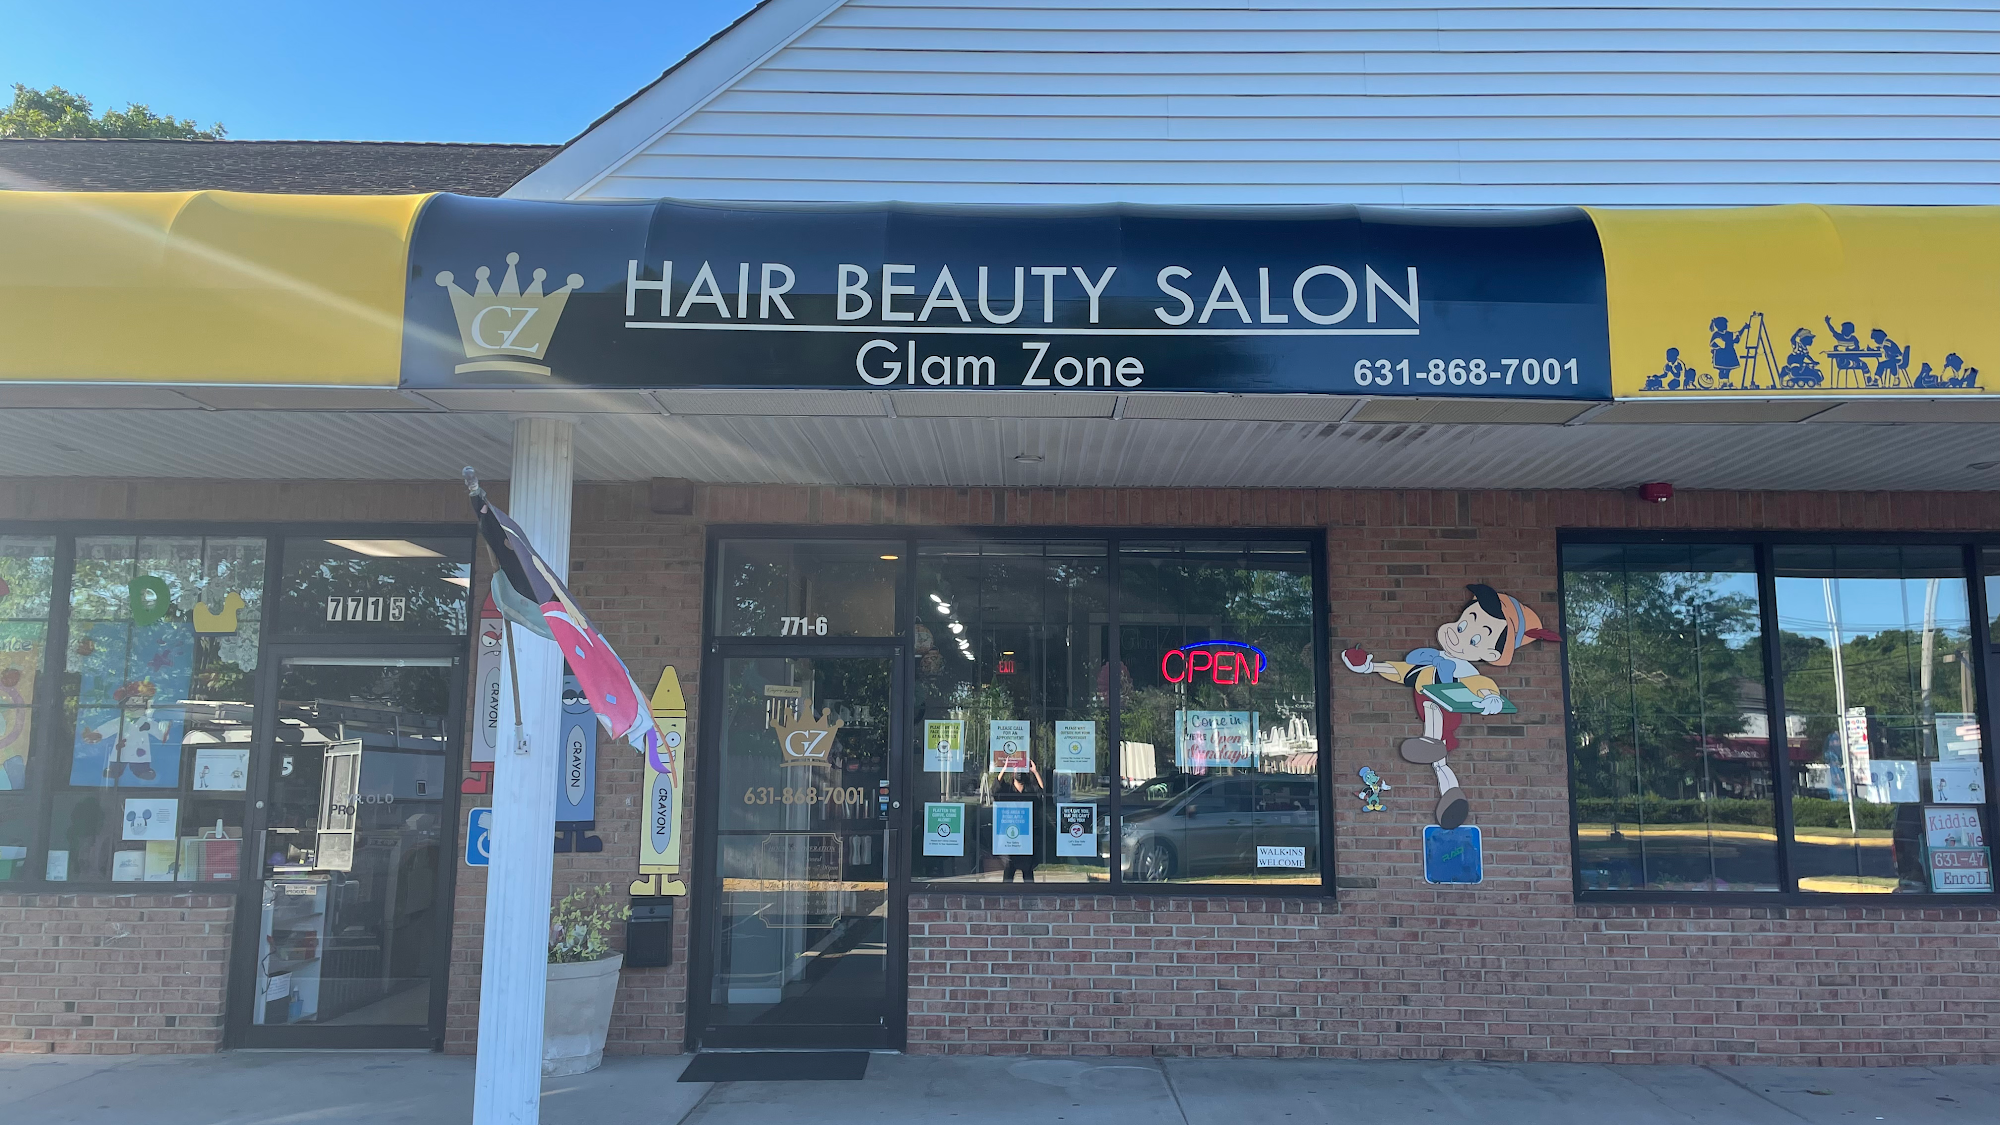 Glam Zone Hair Beauty Salon